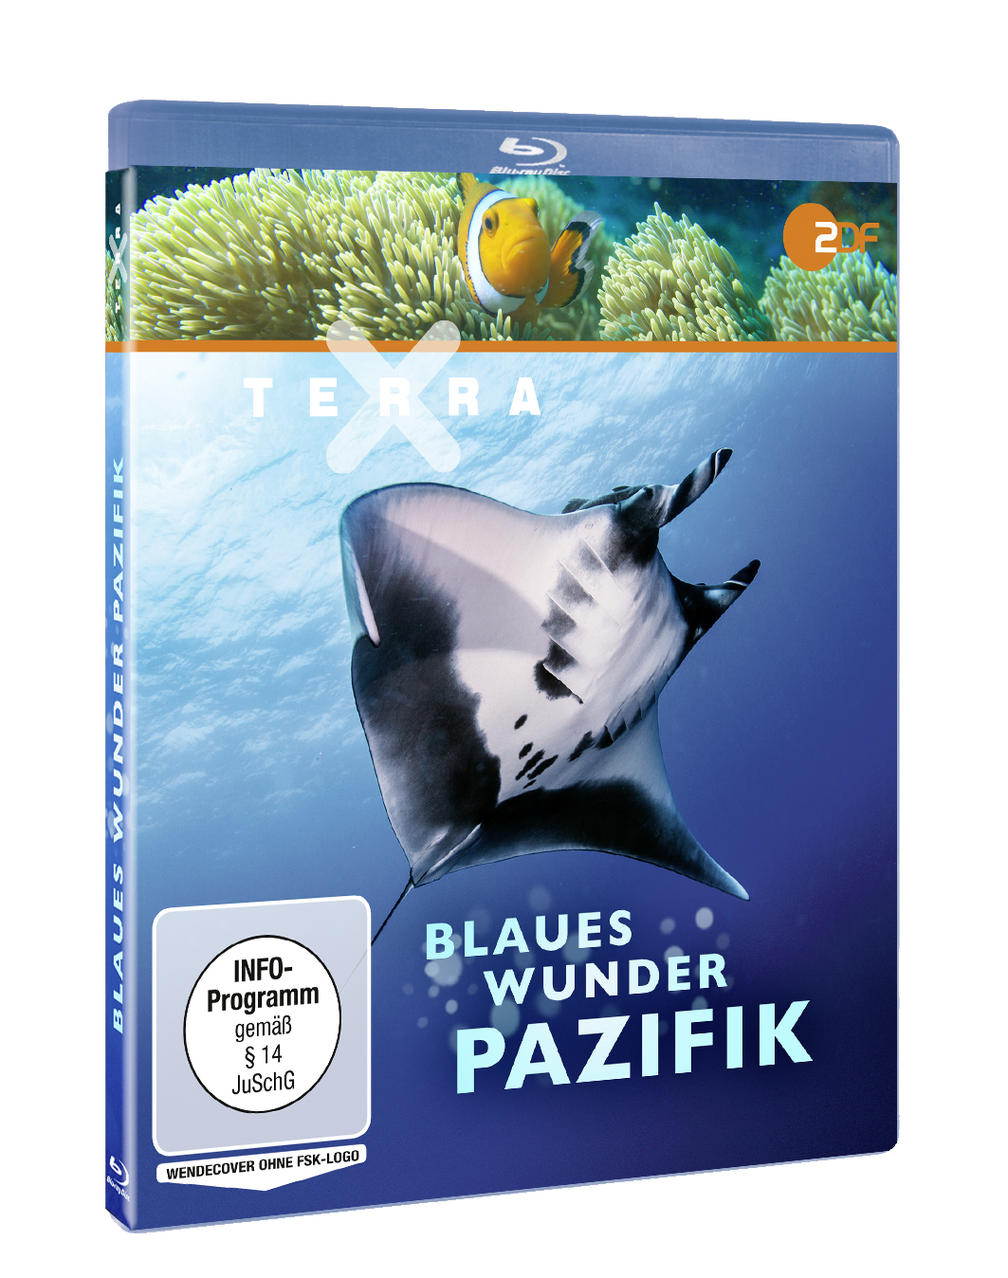 Terra X: Blaues Wunder Blu-ray Pazifik